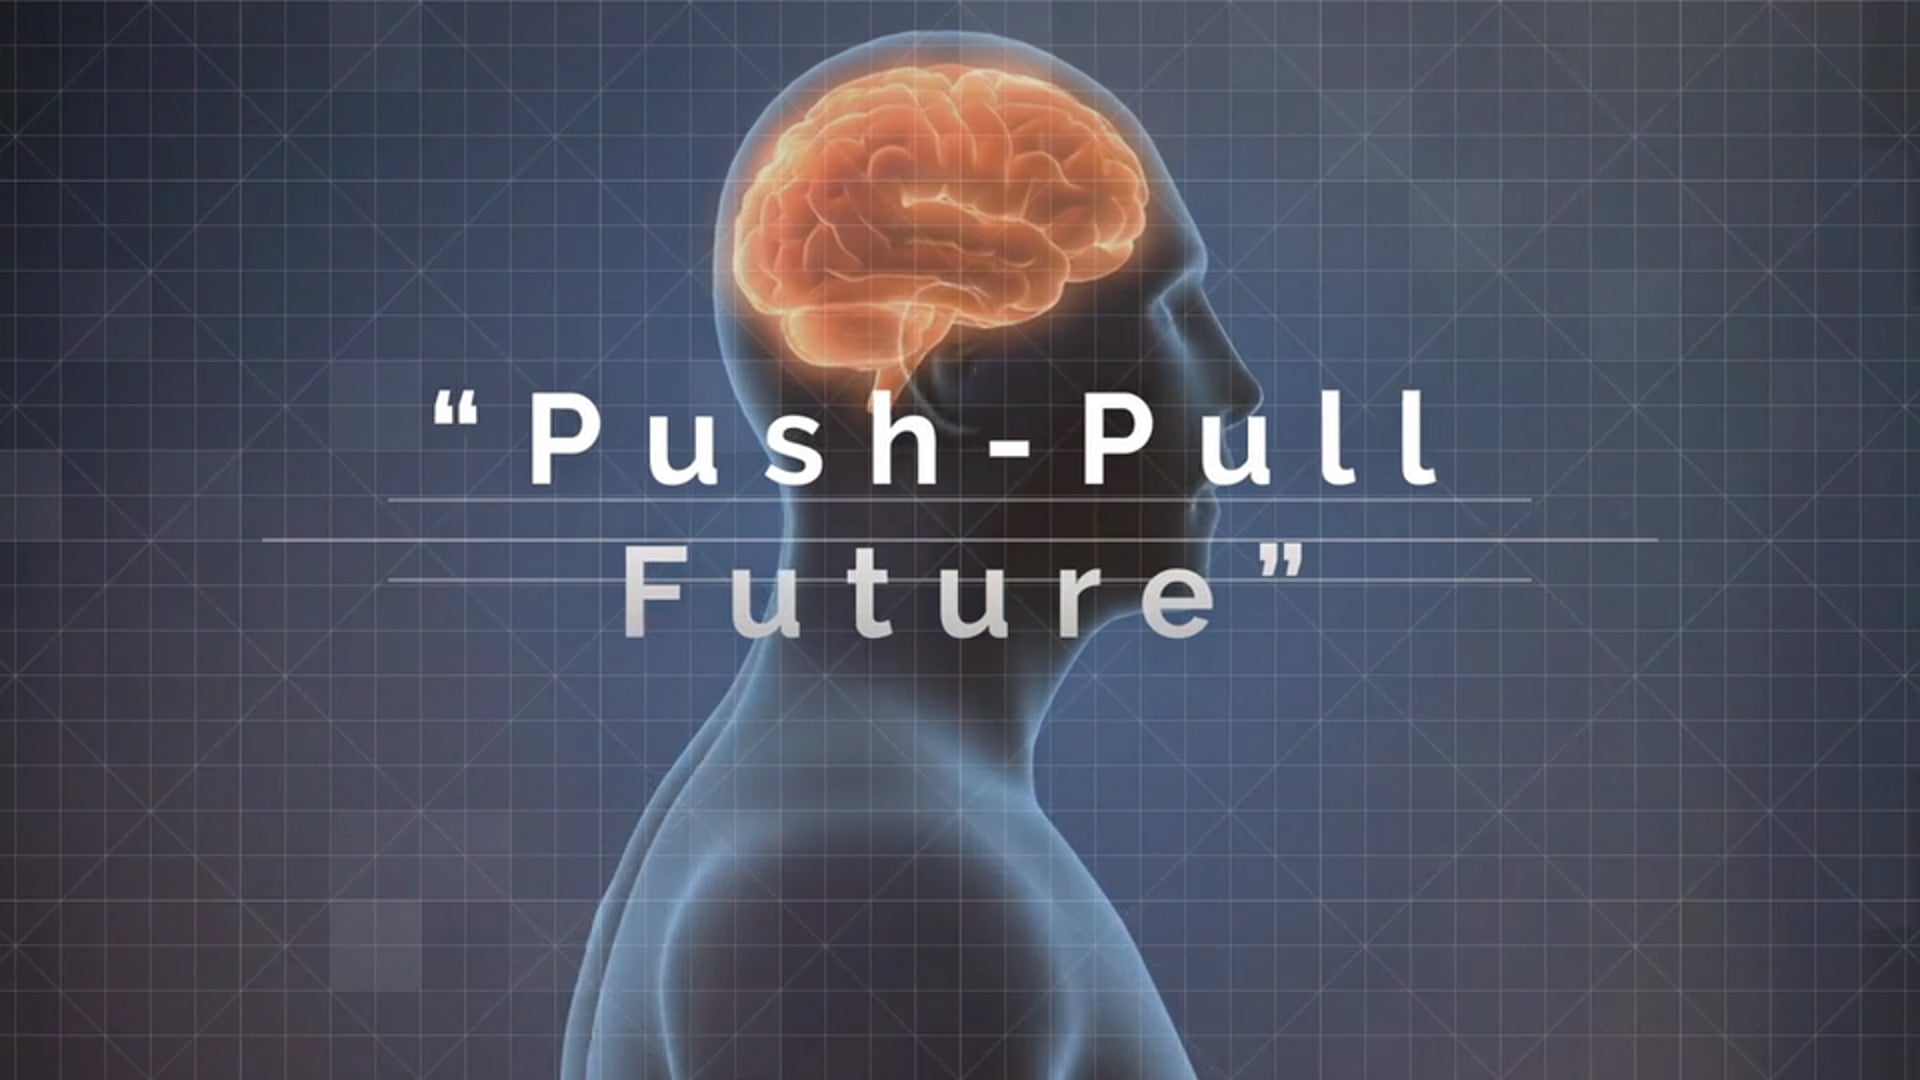 The Push - Pull Future